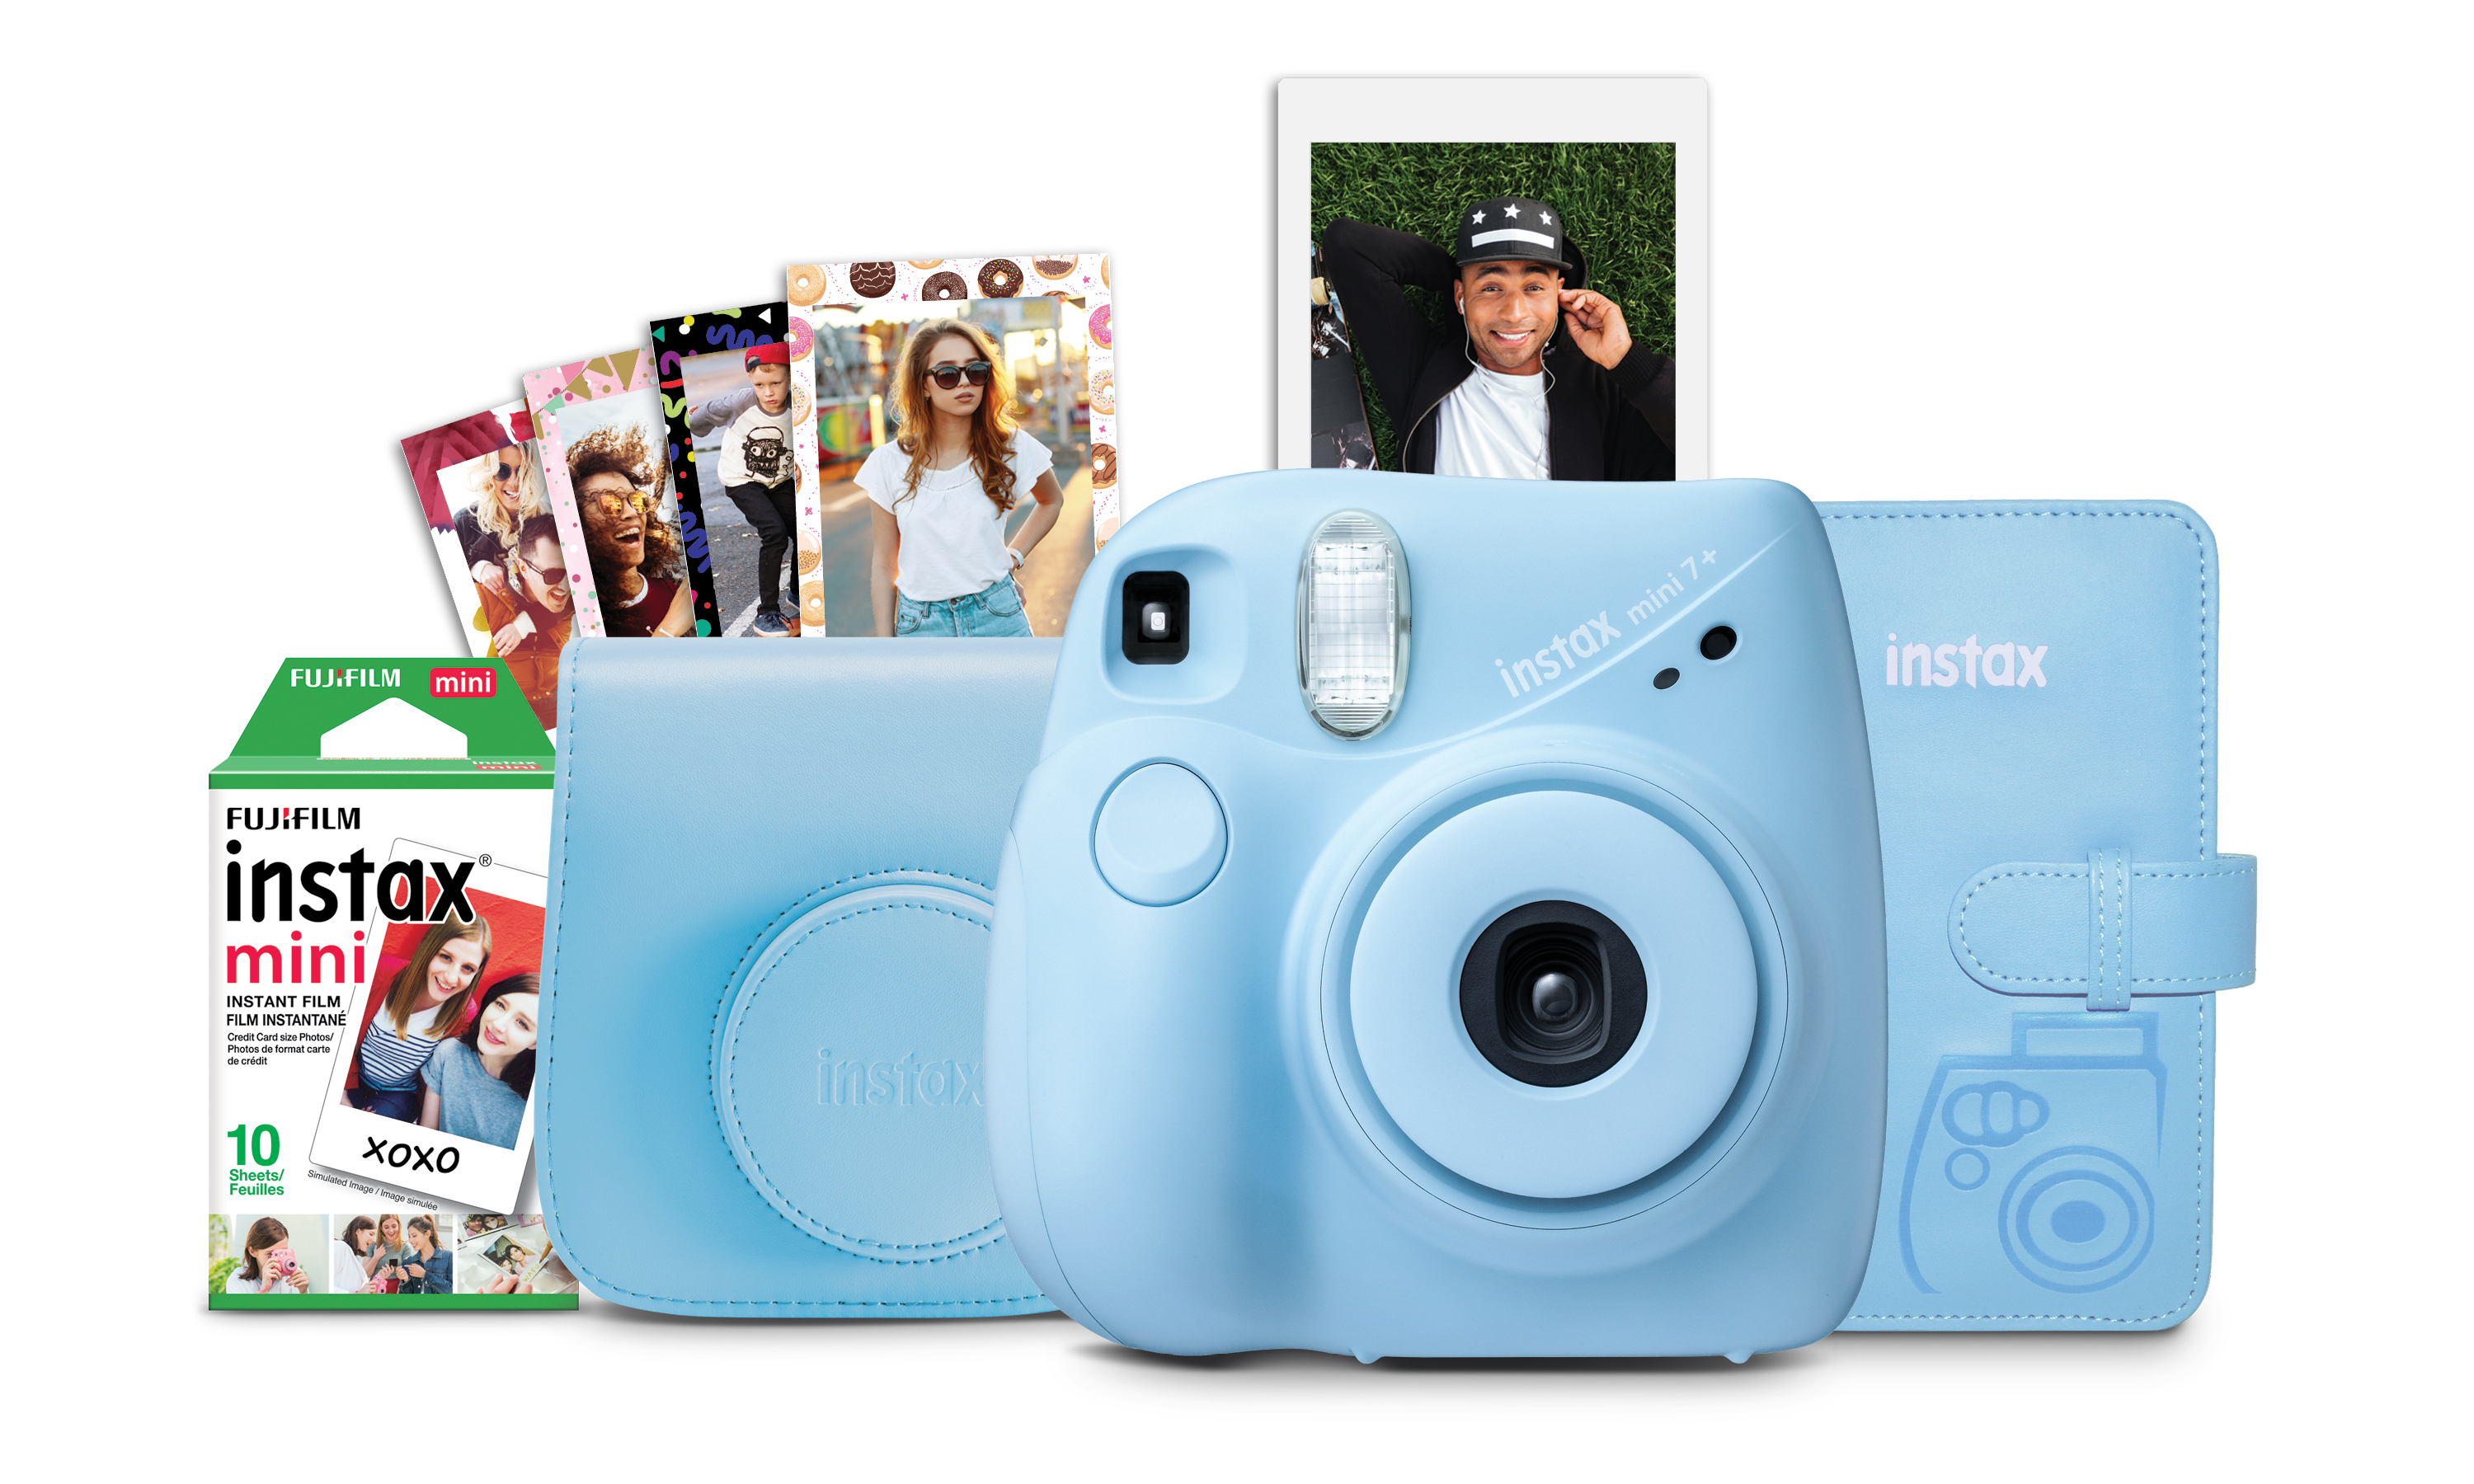 Fujifilm INSTAX Mini 7+ Bundle (10-Pack Film, Album, Camera Case, Stickers), Light Blue, Brand New Condition - image 1 of 8